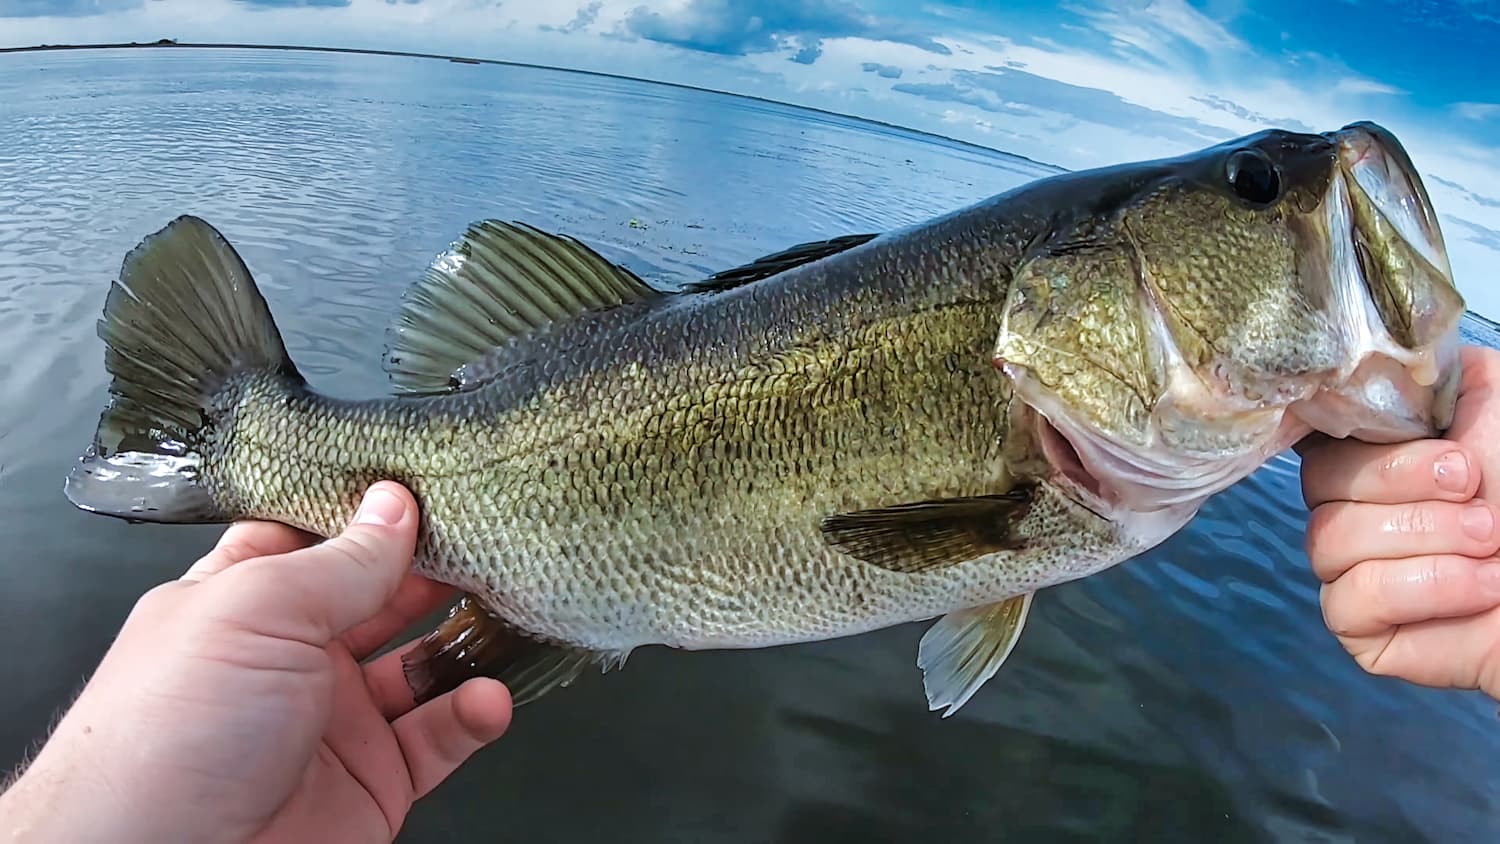 https://www.bassnedge.com/wp-content/uploads/2022/03/fishing-for-bigmouth-bass.jpg